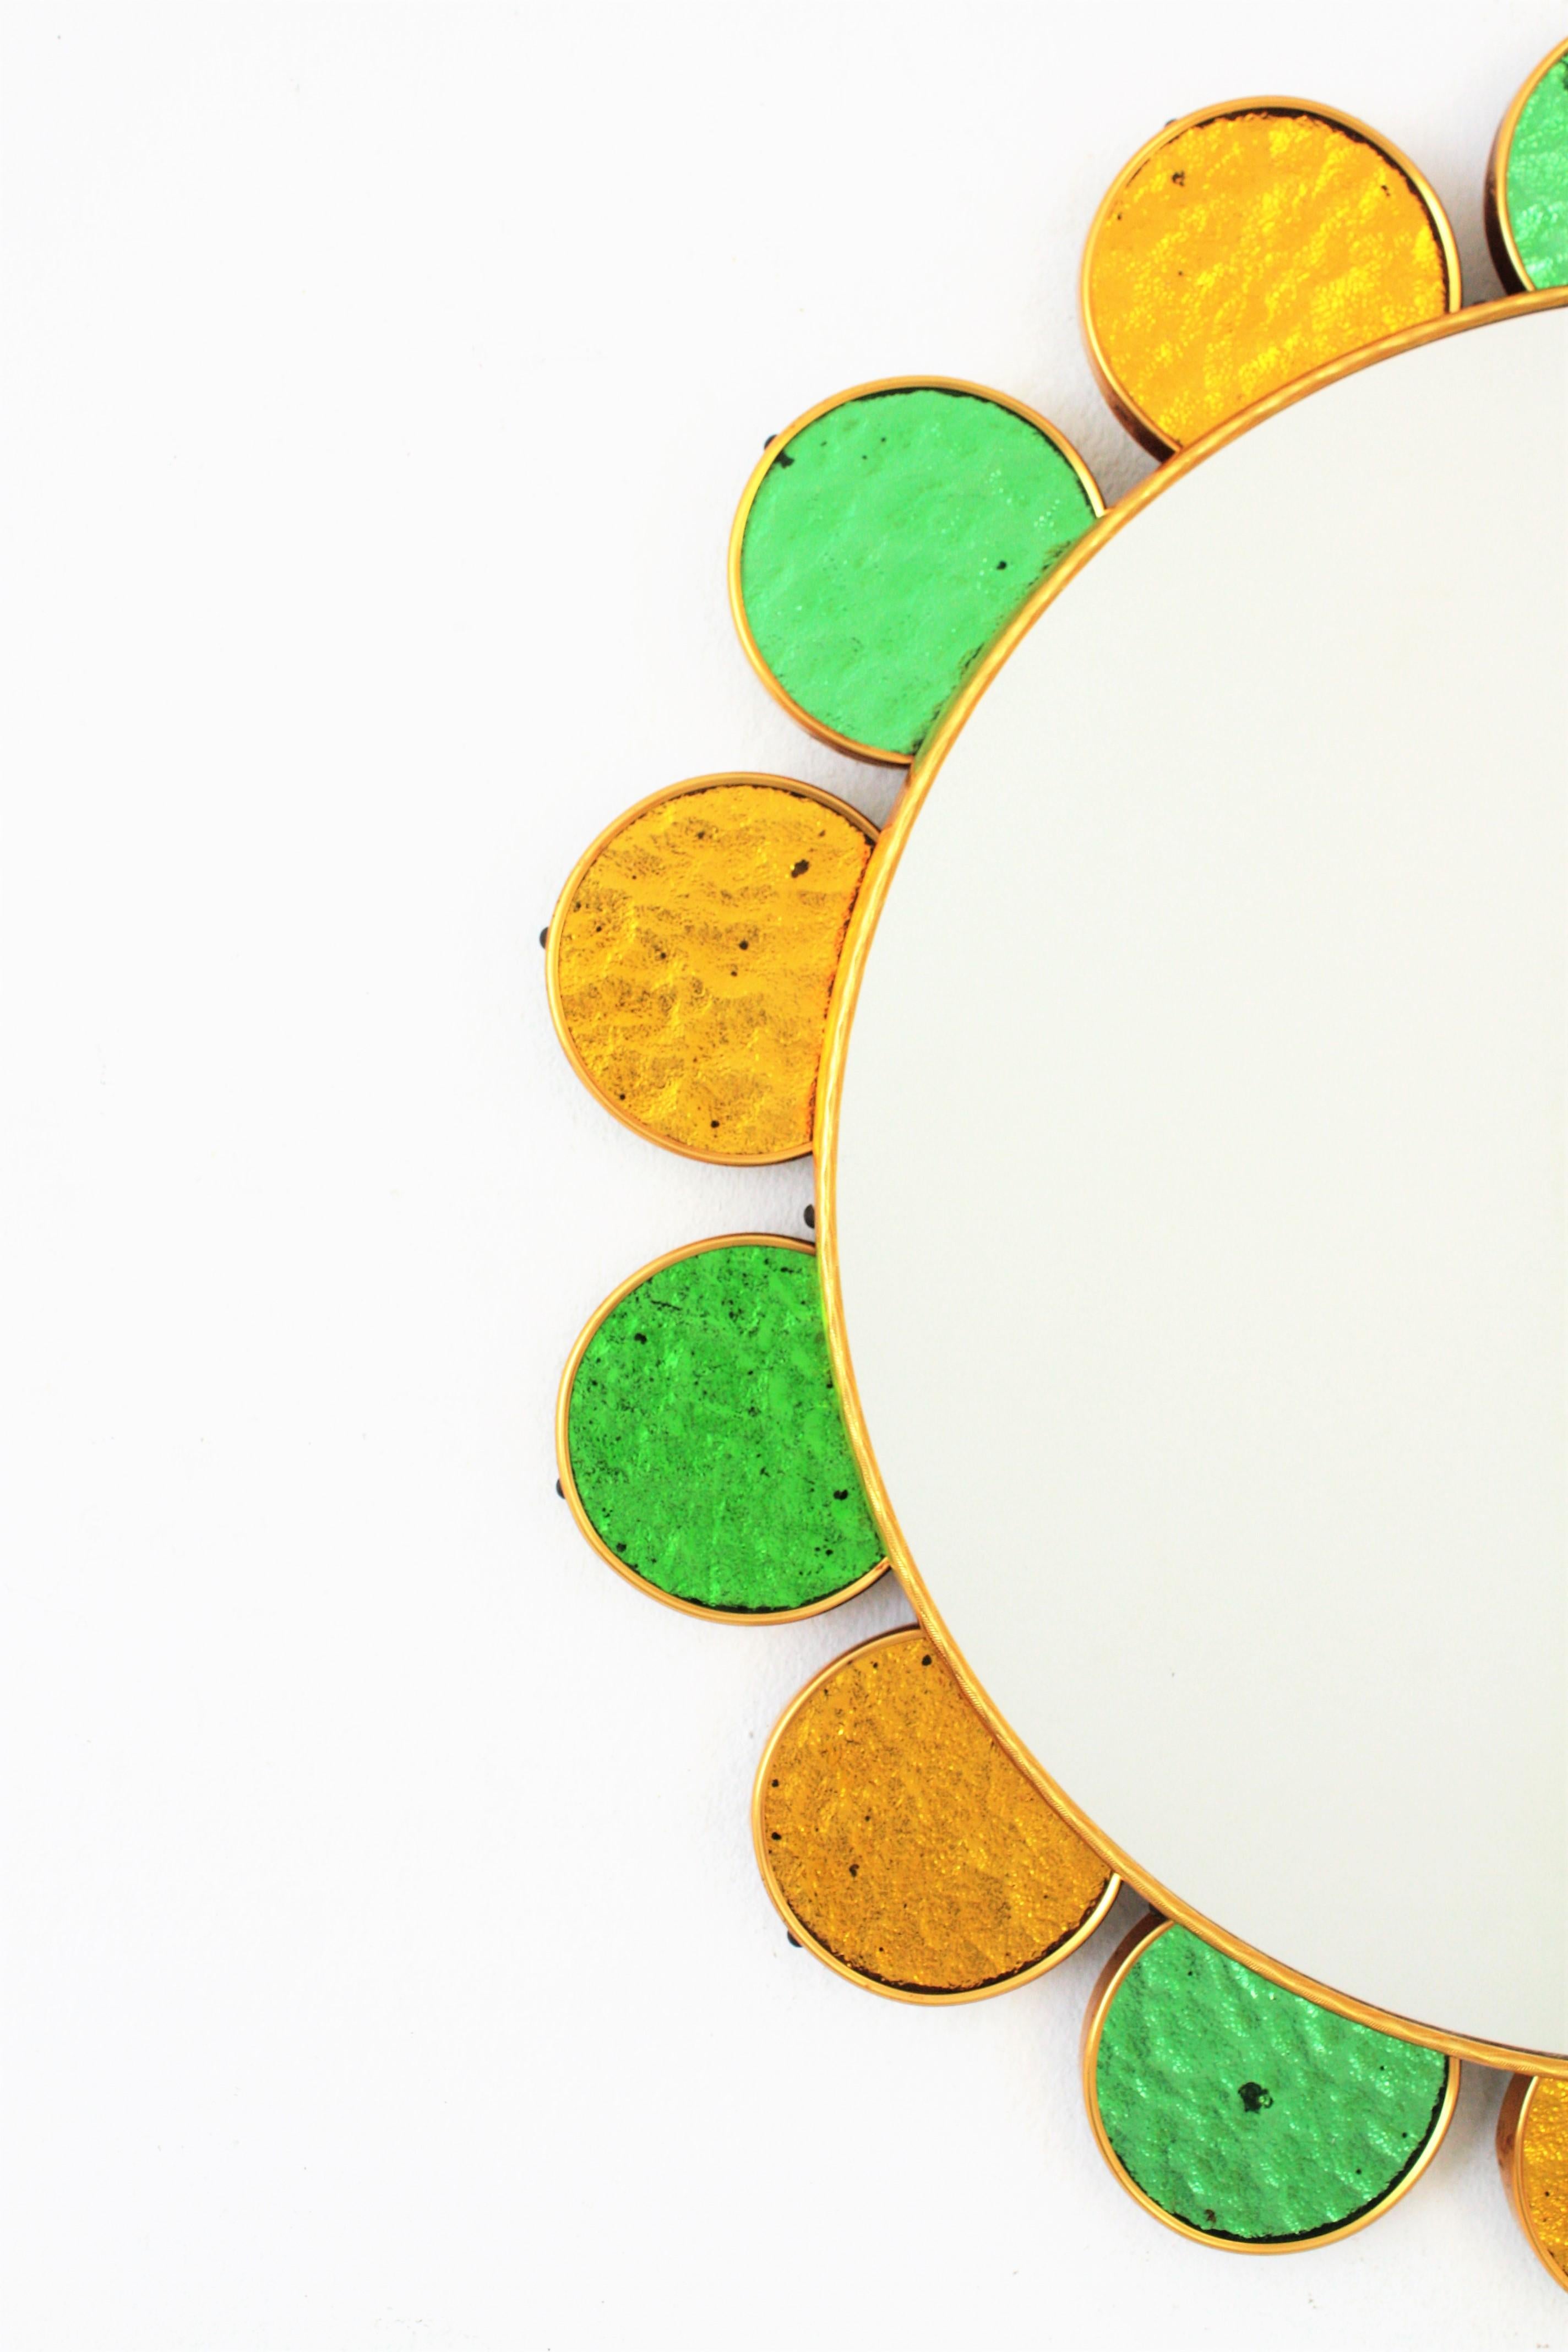 Spanish Flower Sunburst Mirror, Green and Golden Glass Petals Frame For Sale 1